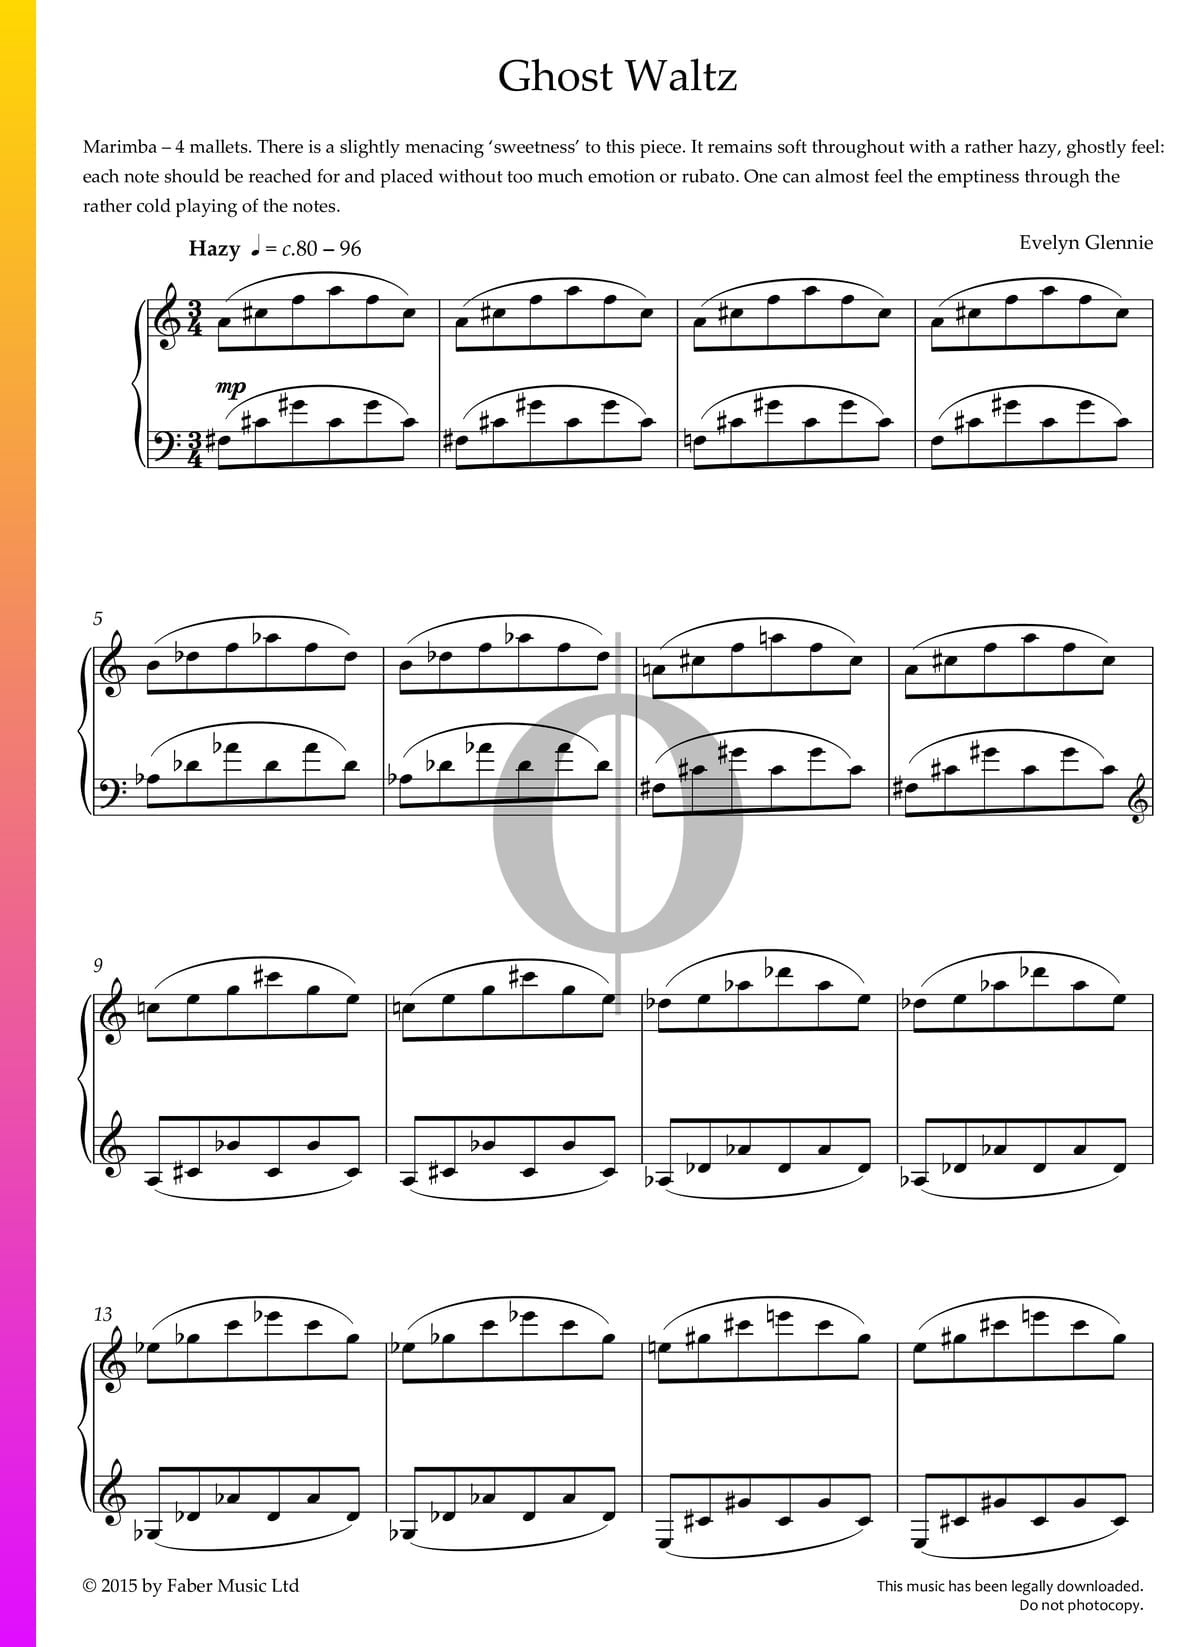 Ghost Waltz Sheet Music Piano Solo Pdf Download Oktav 